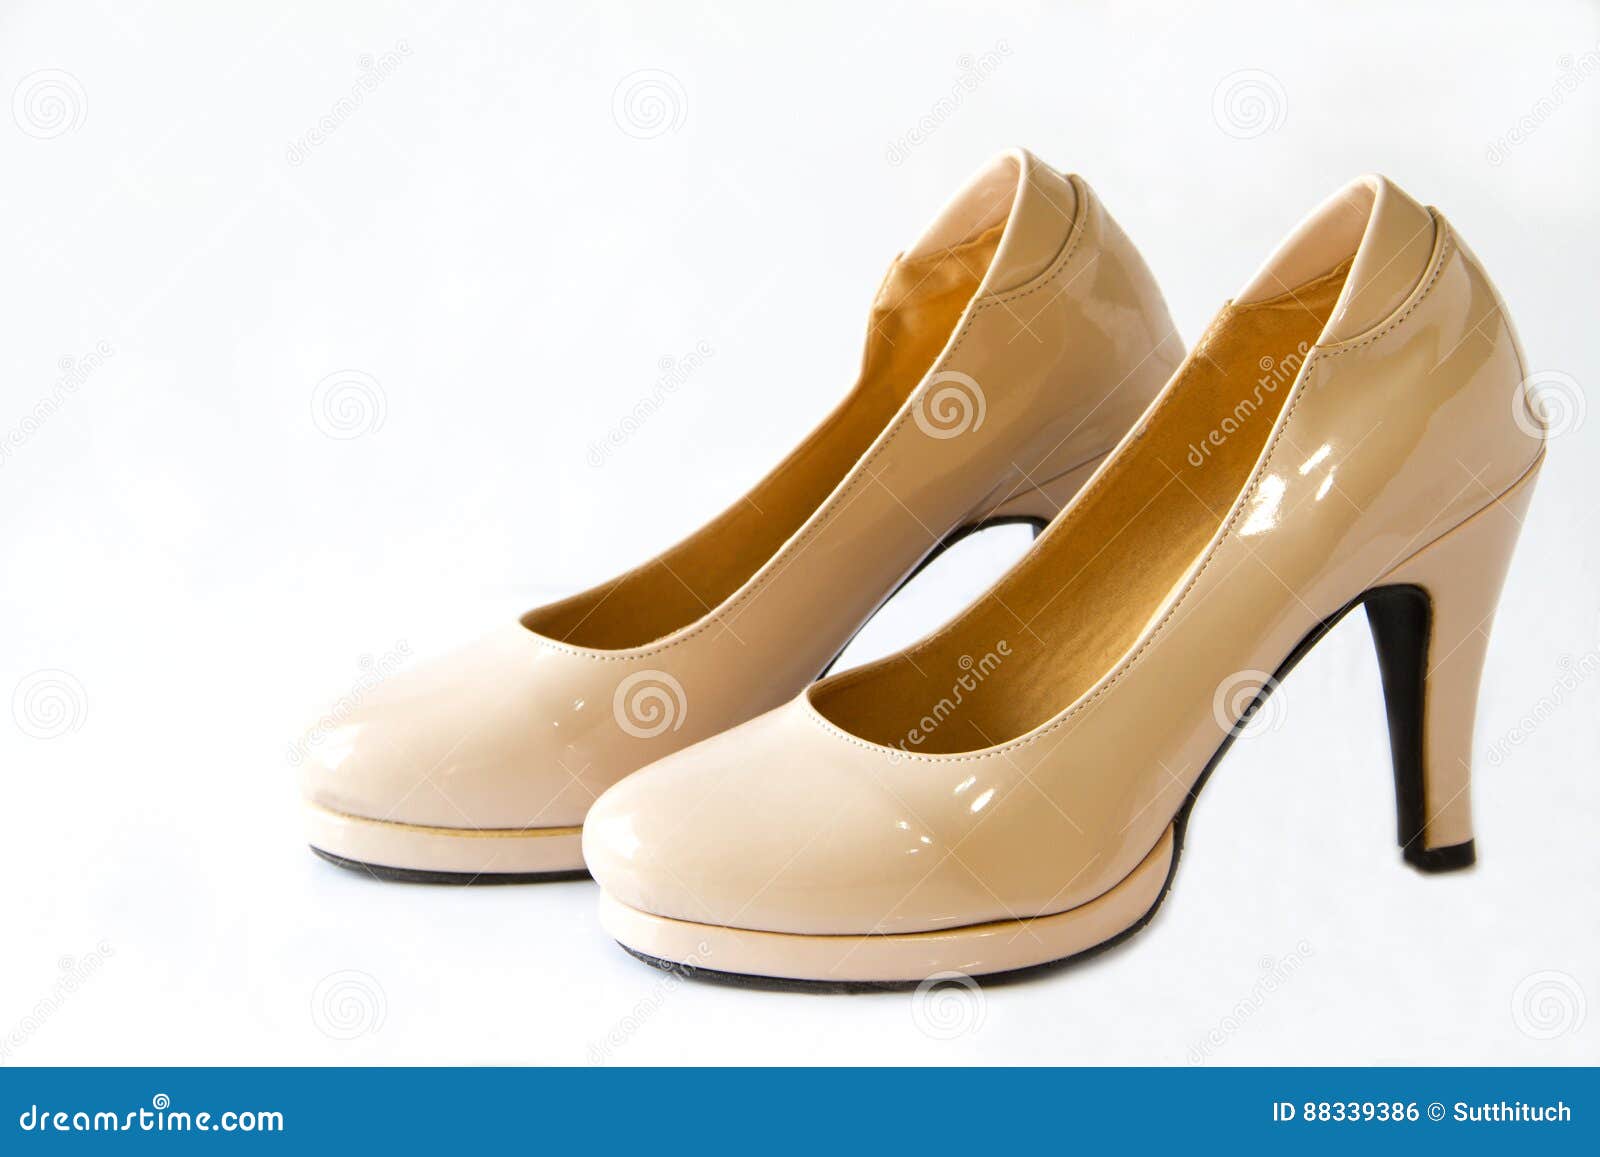 8B Dior Cream Colored Slingback Heels - No Box | eBay